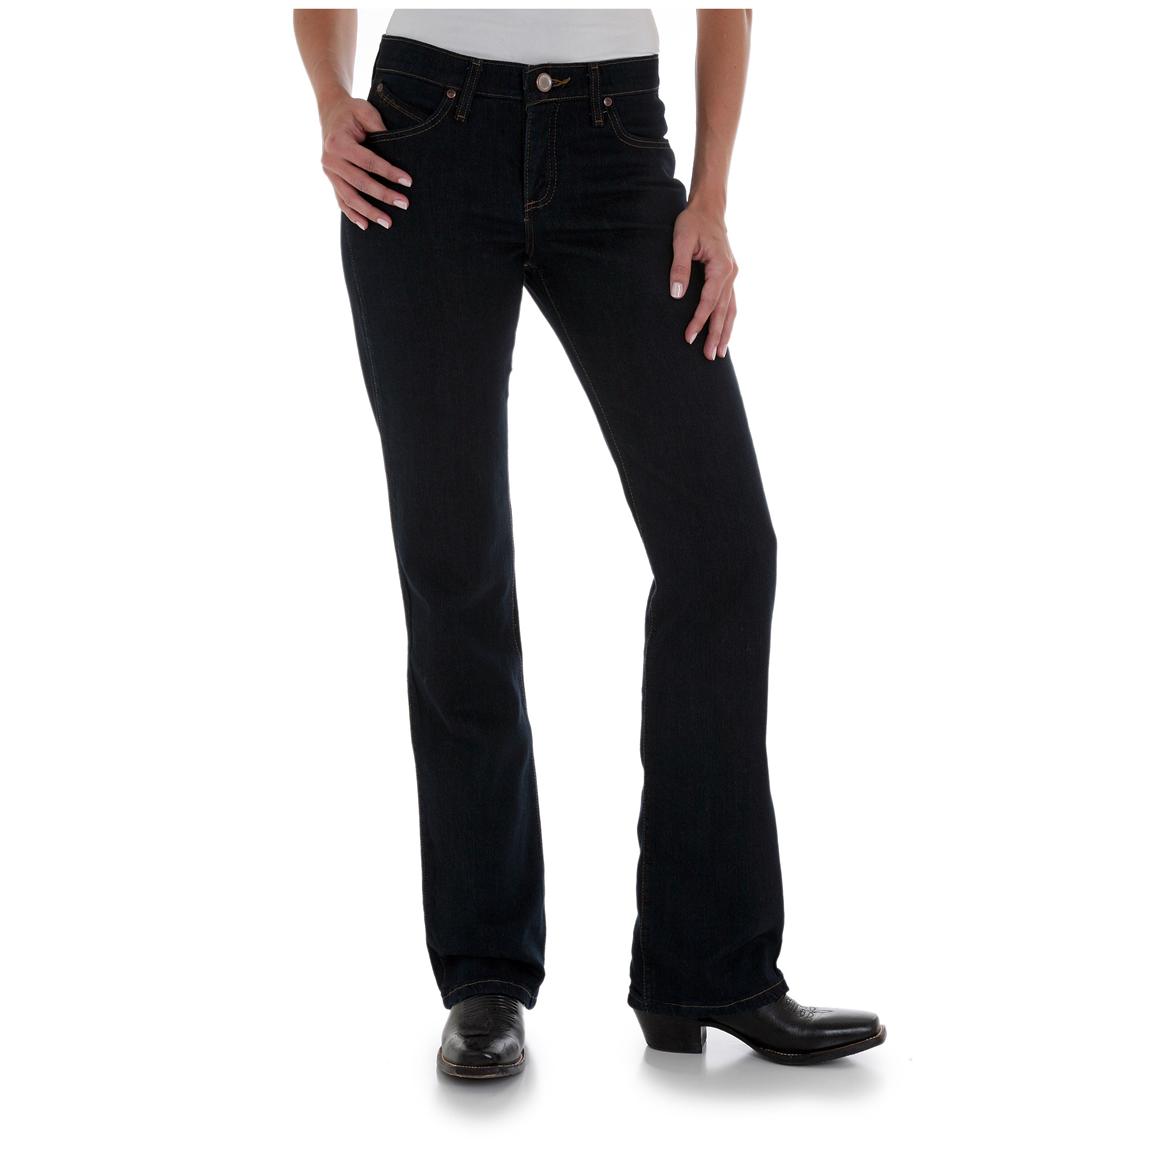 White Sierra Womens Microtek Fleece Pants 31 Inseam Black 657814 Jeans And Pants At